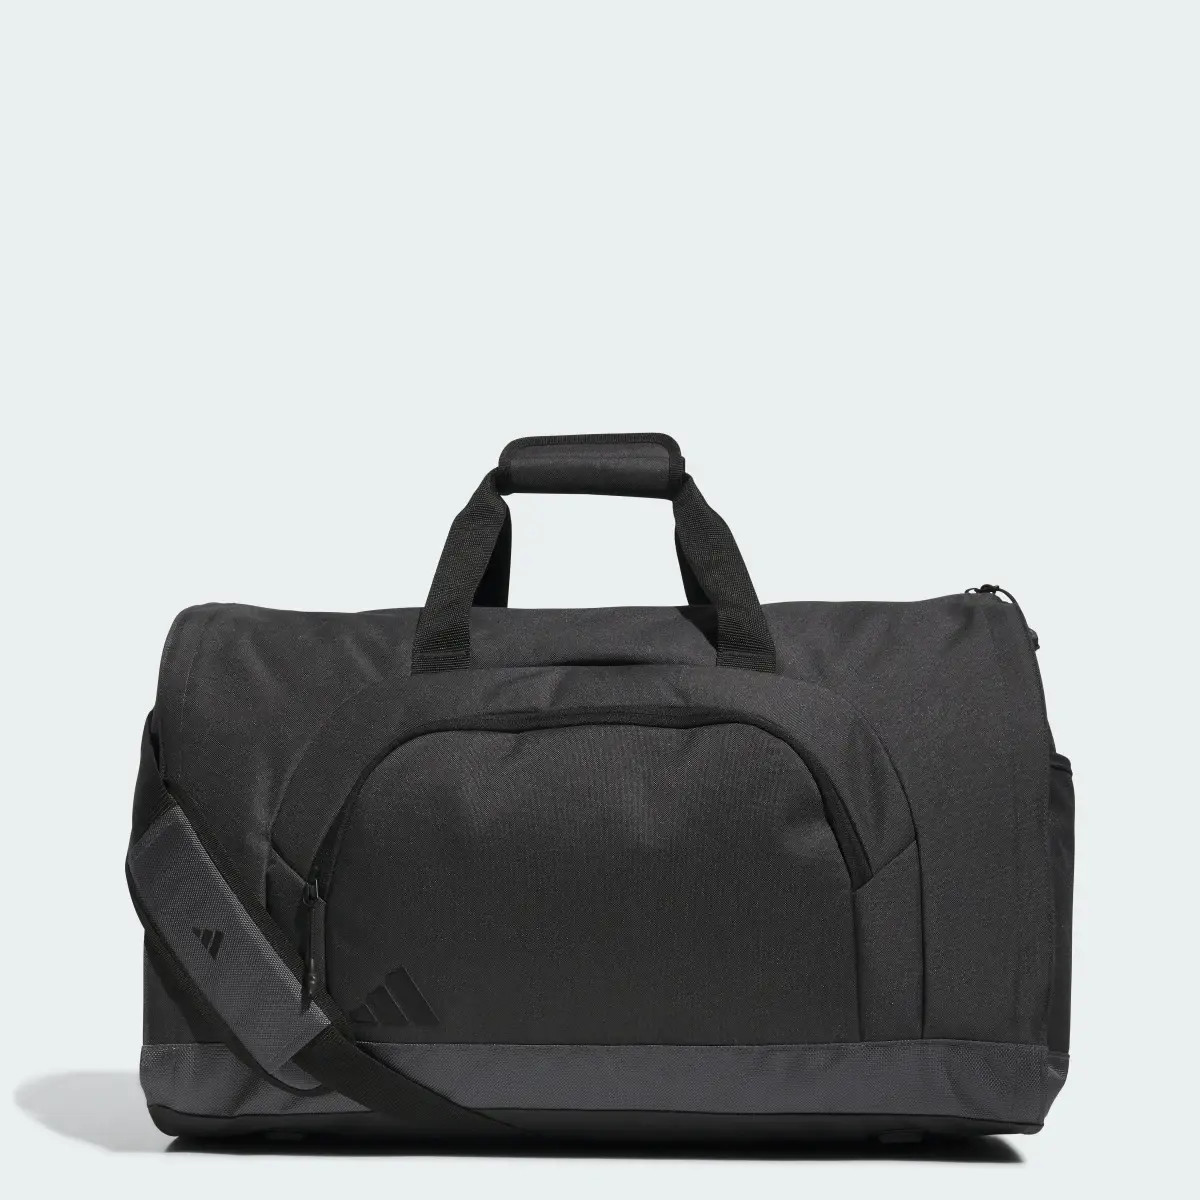 Adidas Garment Duffle Bag. 1